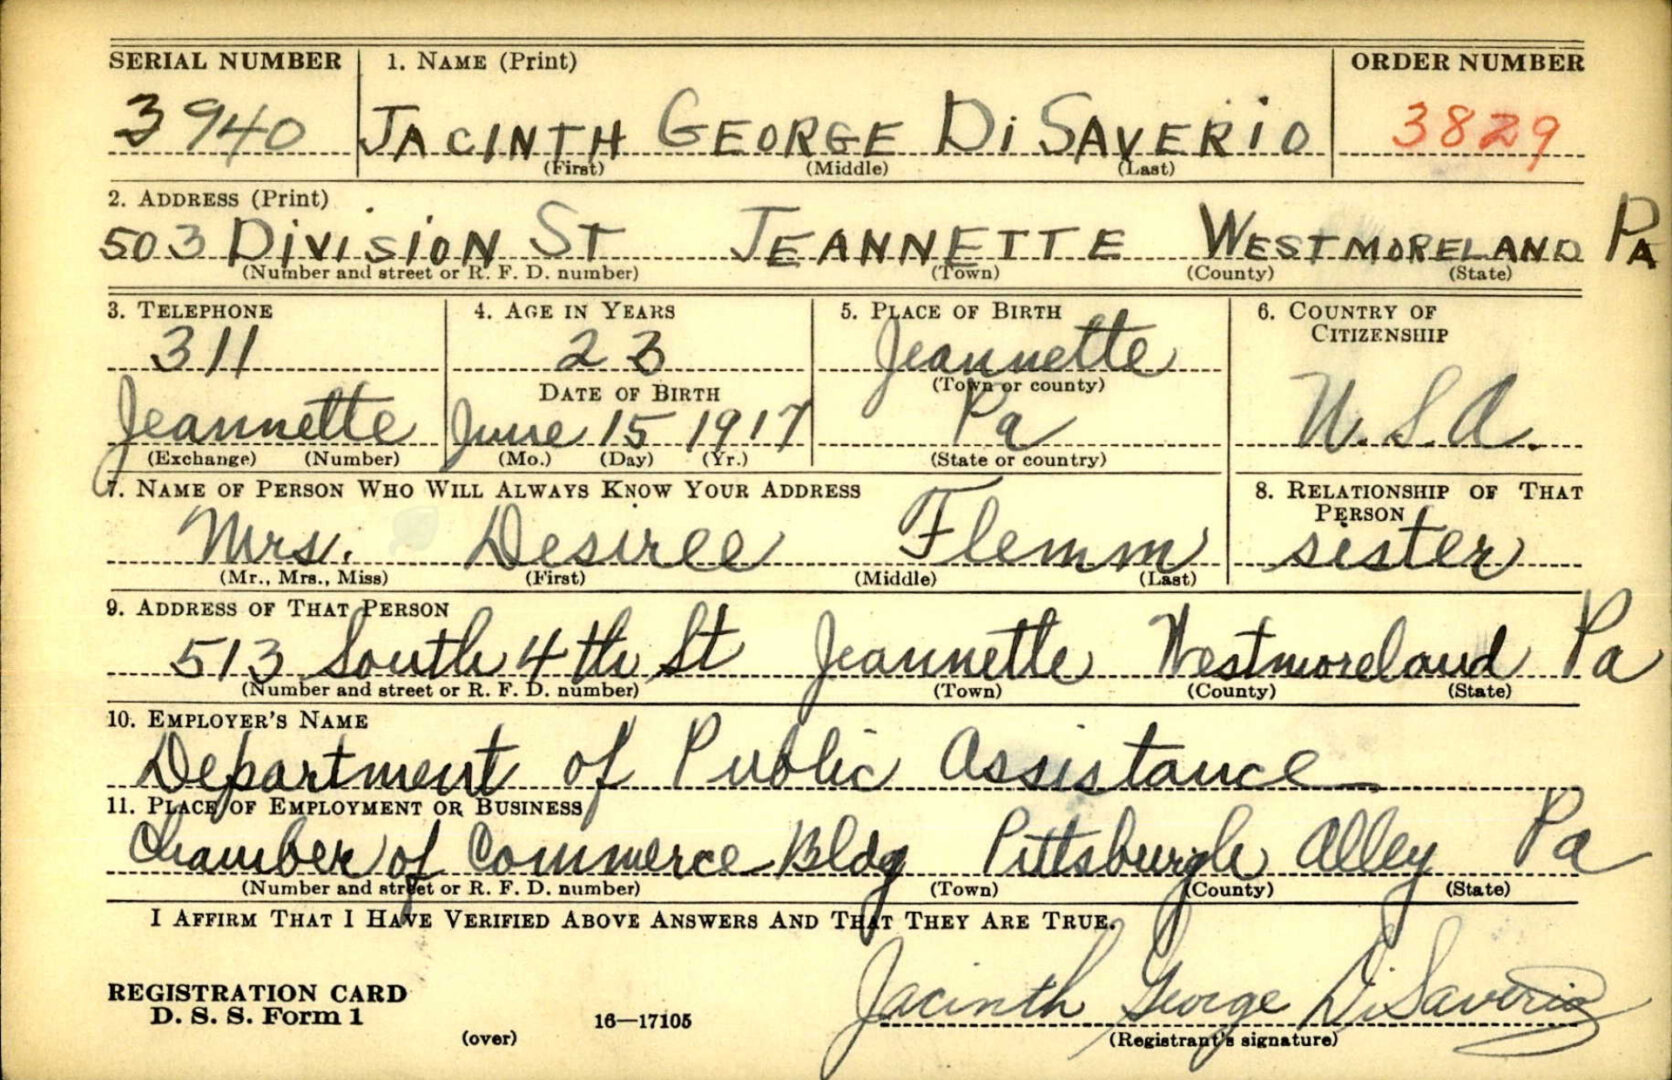 U.S. WWII Draft Card for Jacinth George Di Saverio.